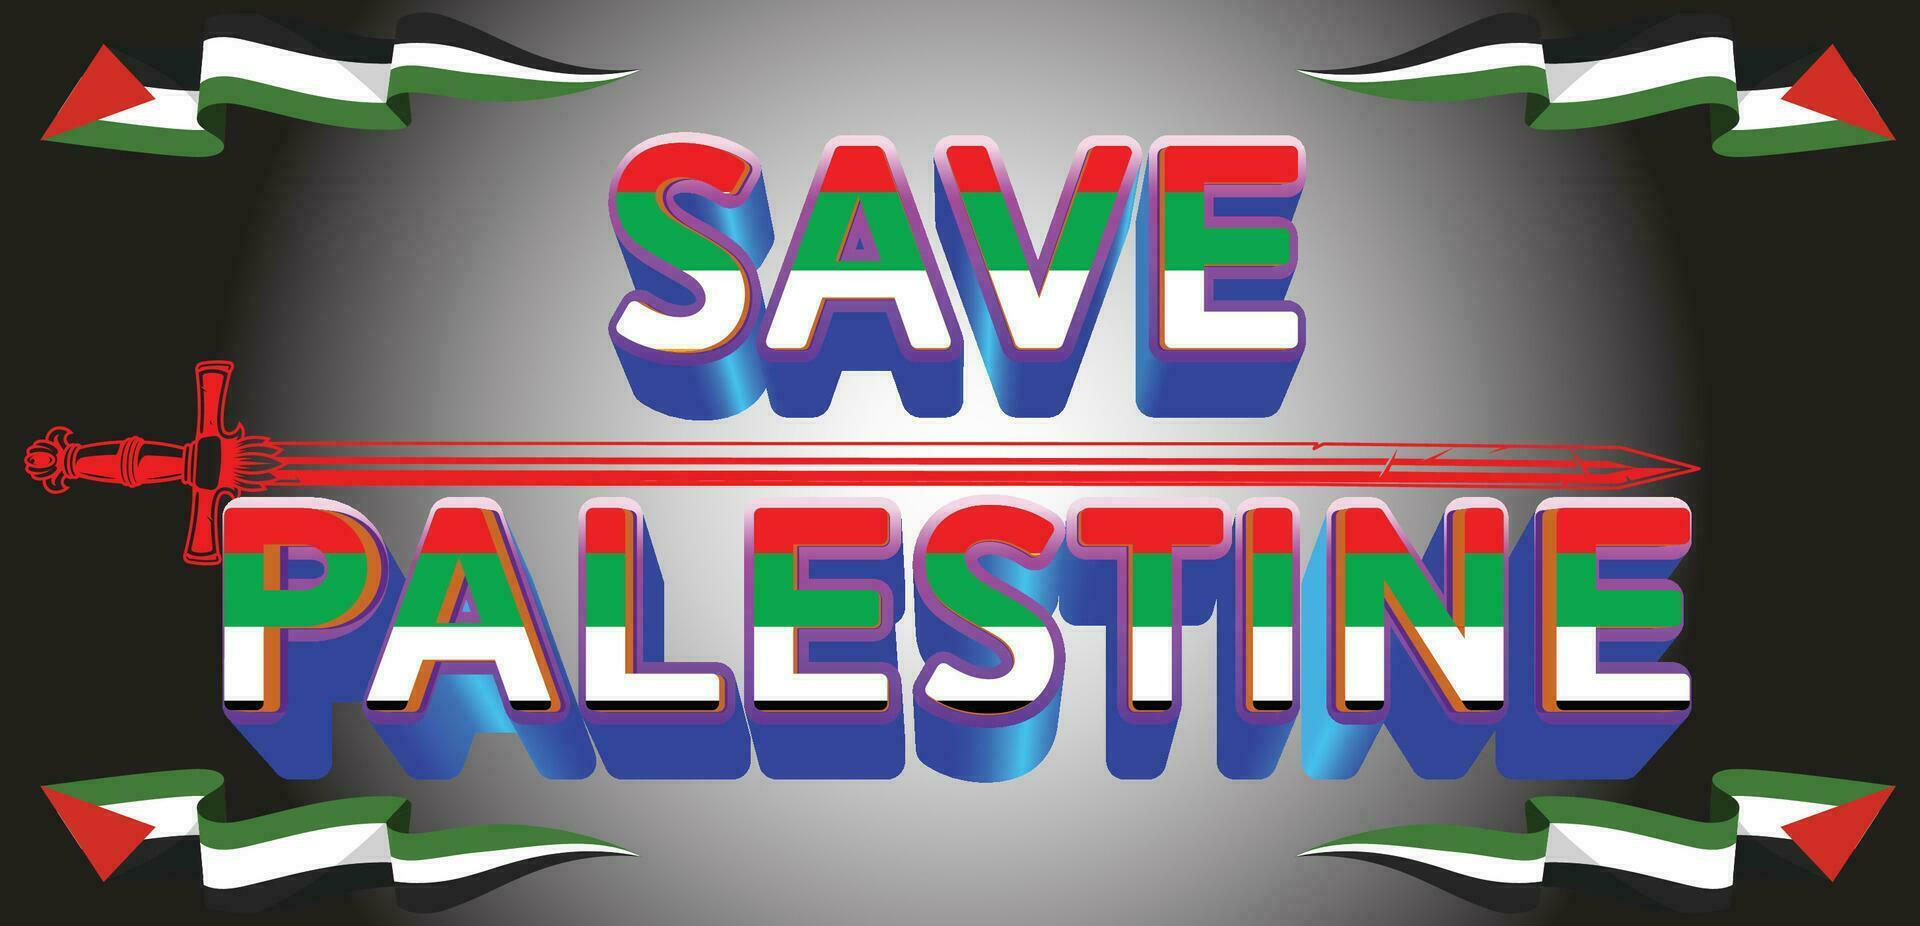 Salve  Palestina vetor ilustração fundo